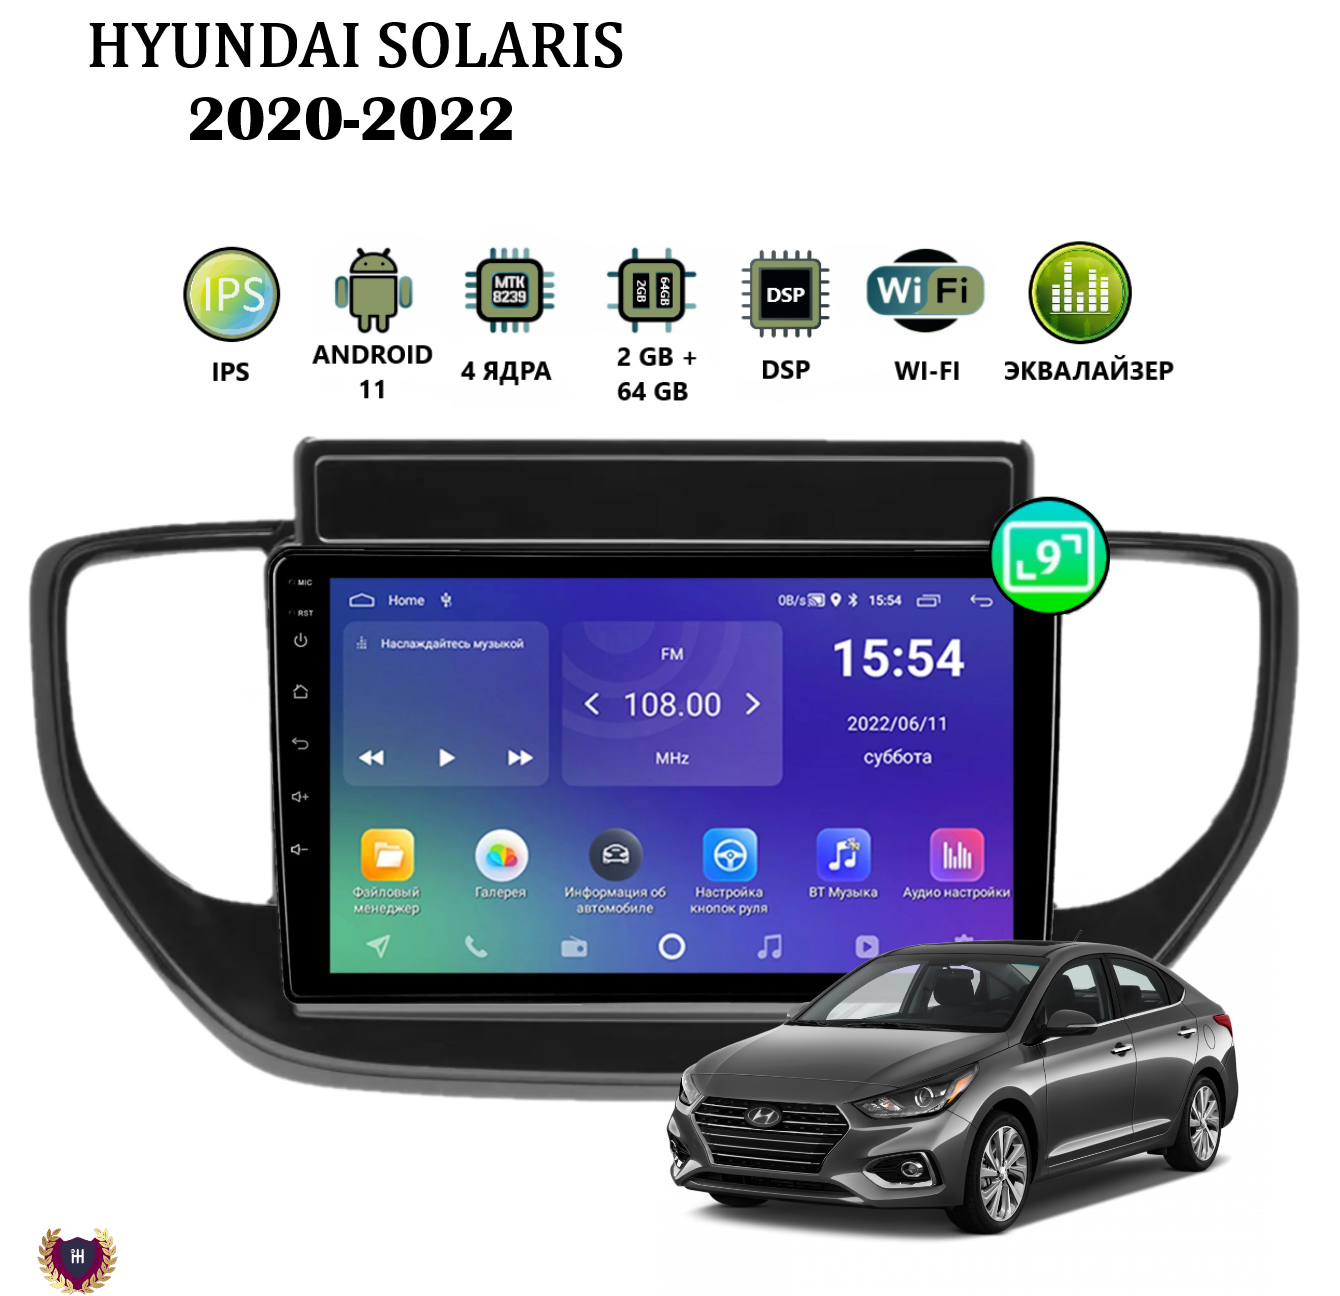 Автомагнитола Podofo для Hyundai Solaris 2020-2022, Android 11, 264 Gb, Wi-Fi, GPS, IPS